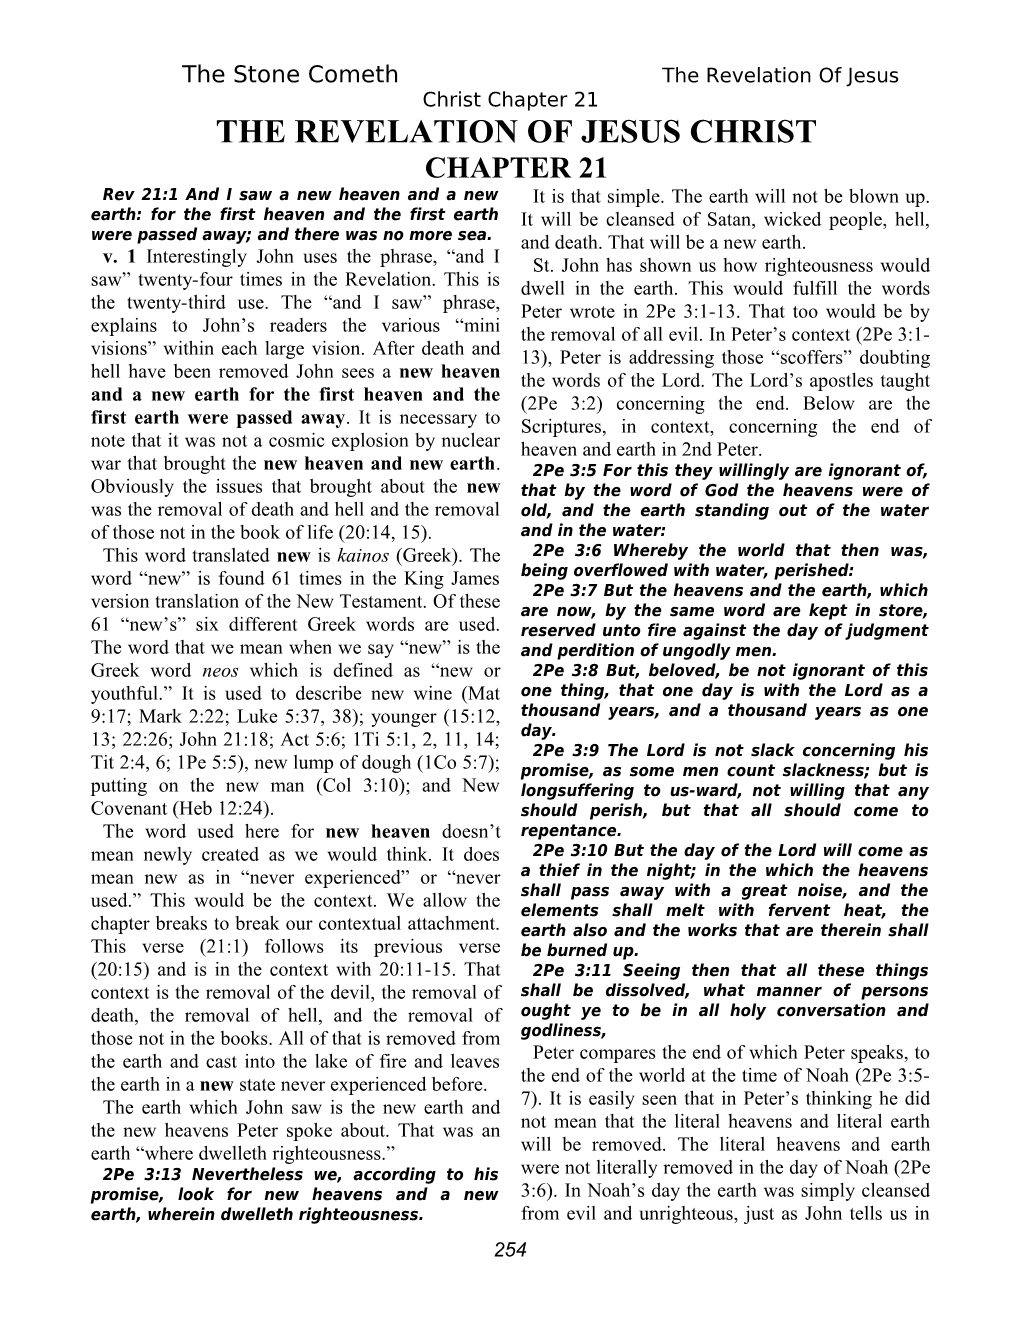 The Stone Comeththe Revelation of Jesus Christ Chapter 21